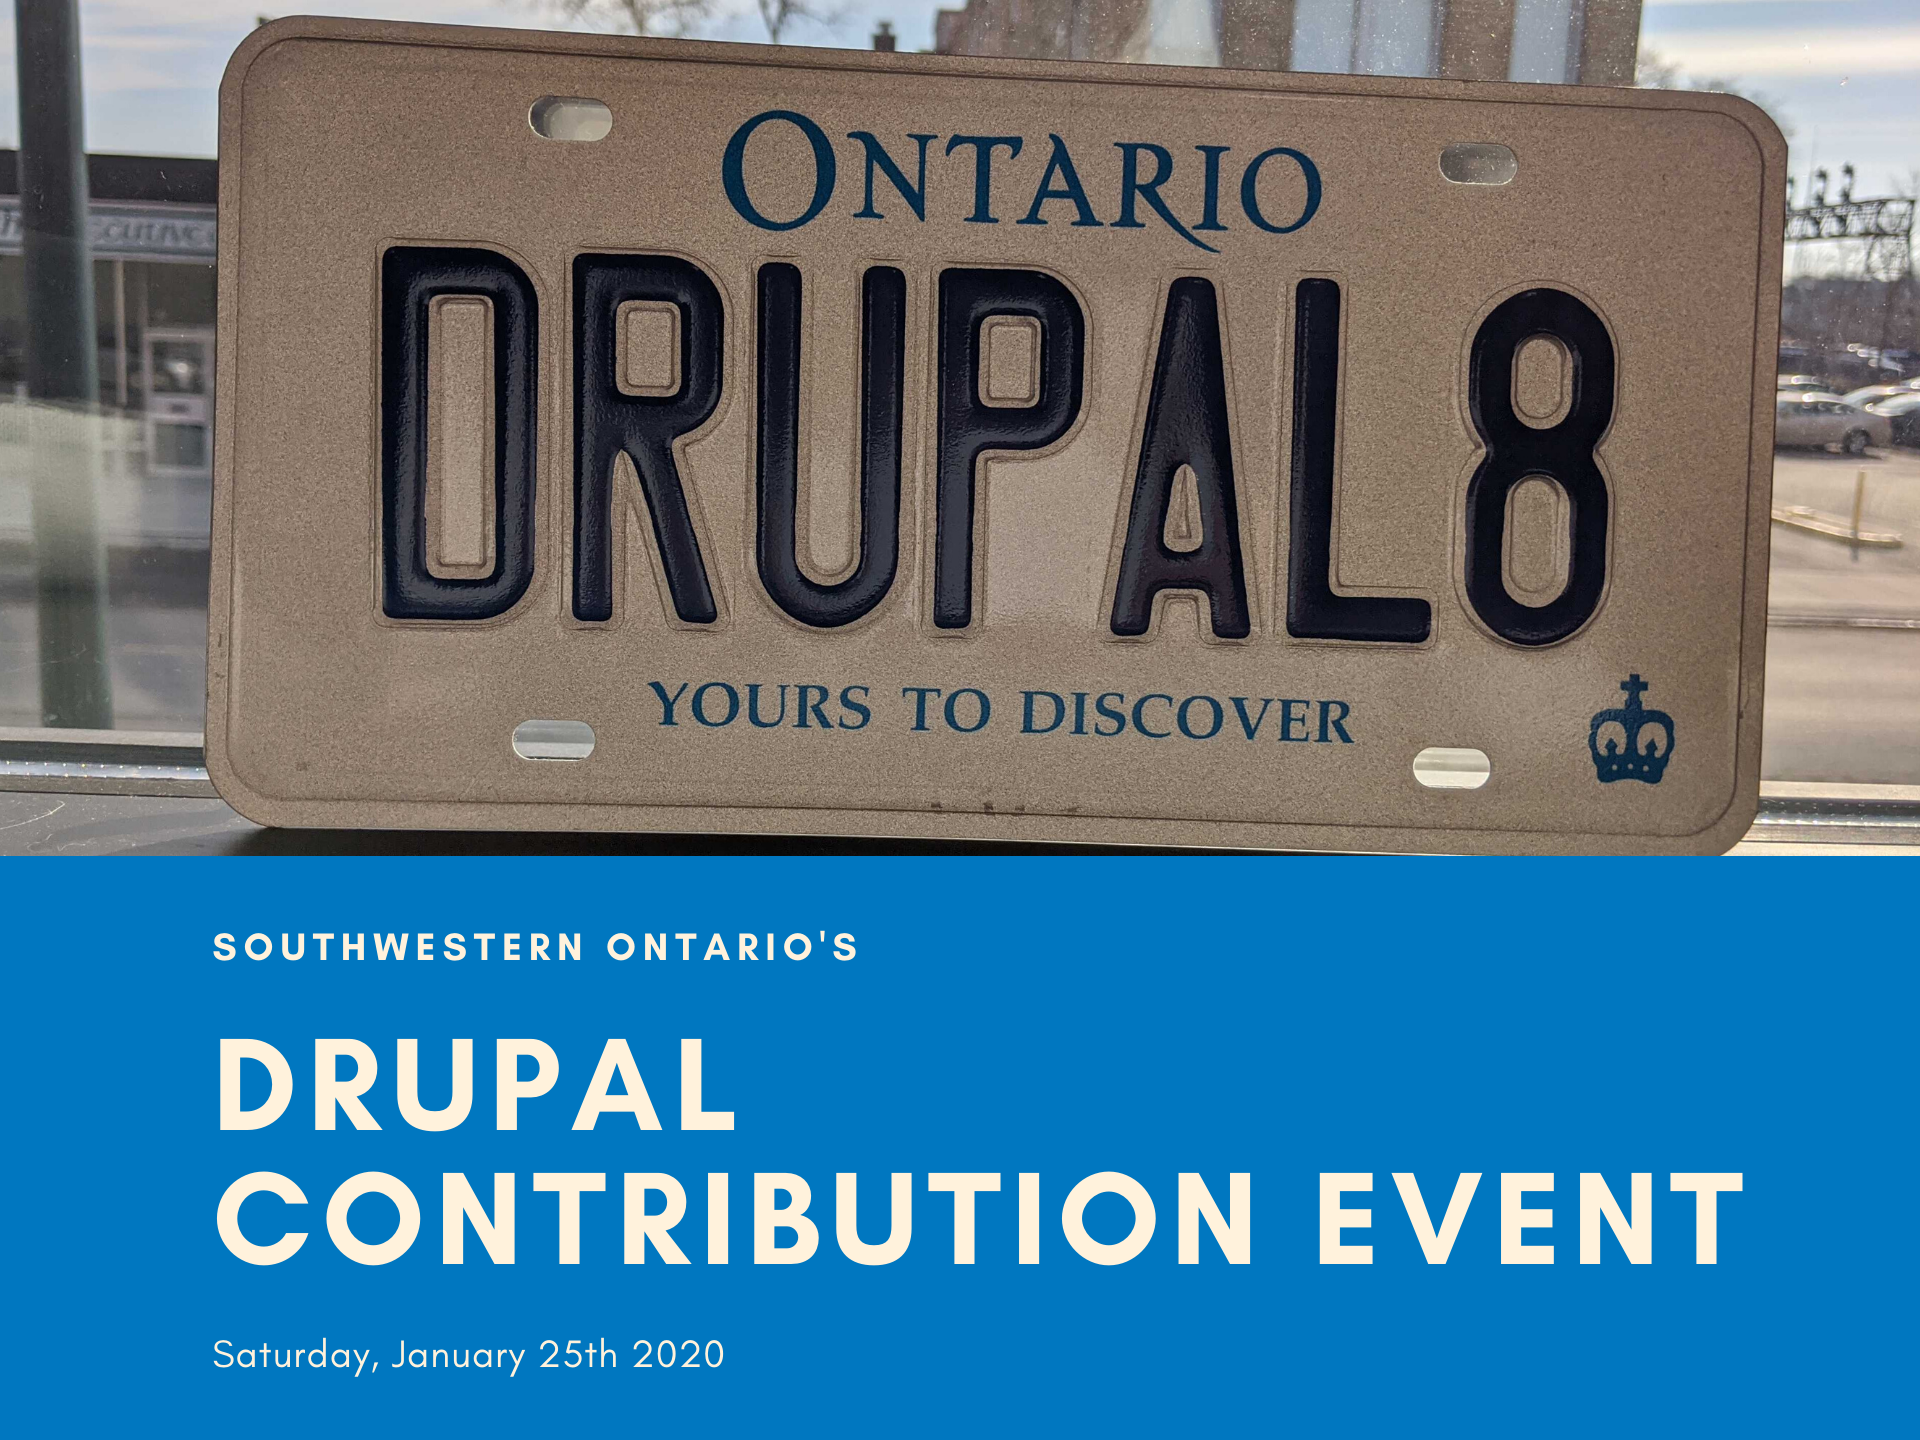 Drupal 8 Ontario license plate